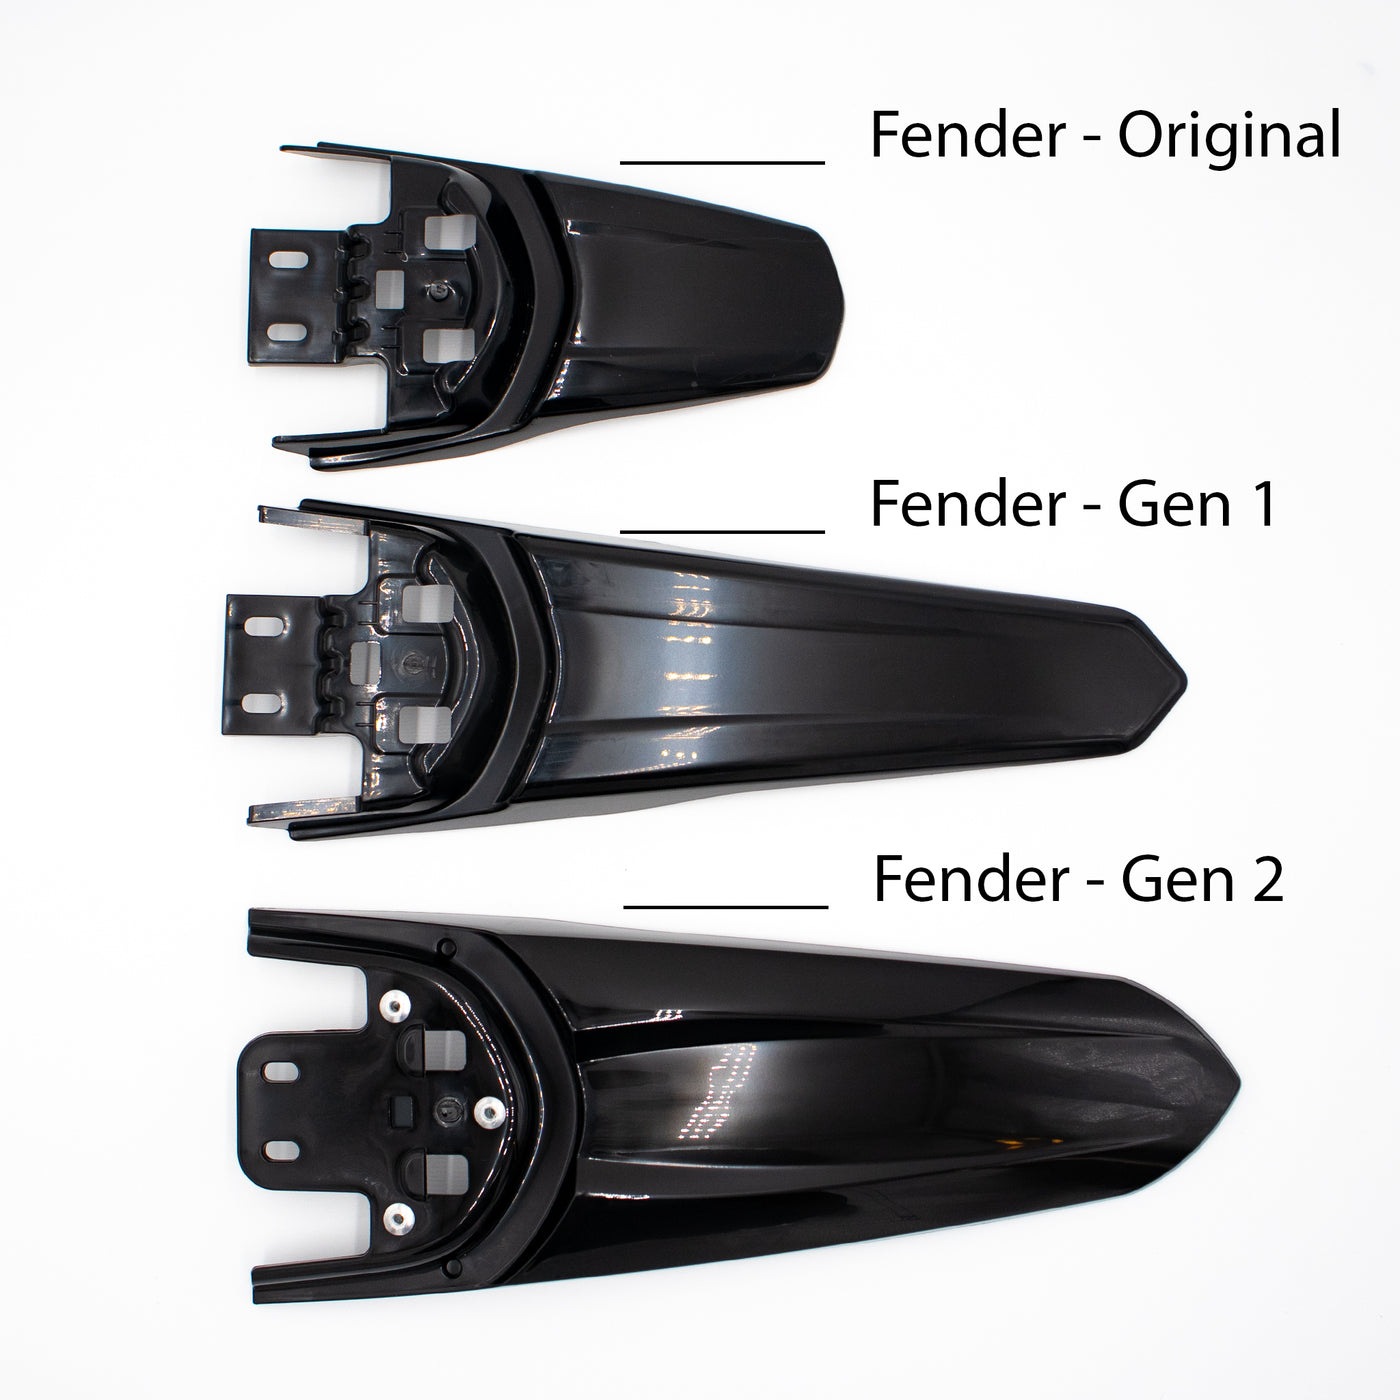 SUR-RON Fender Gen2 extra lang, breit & stabil